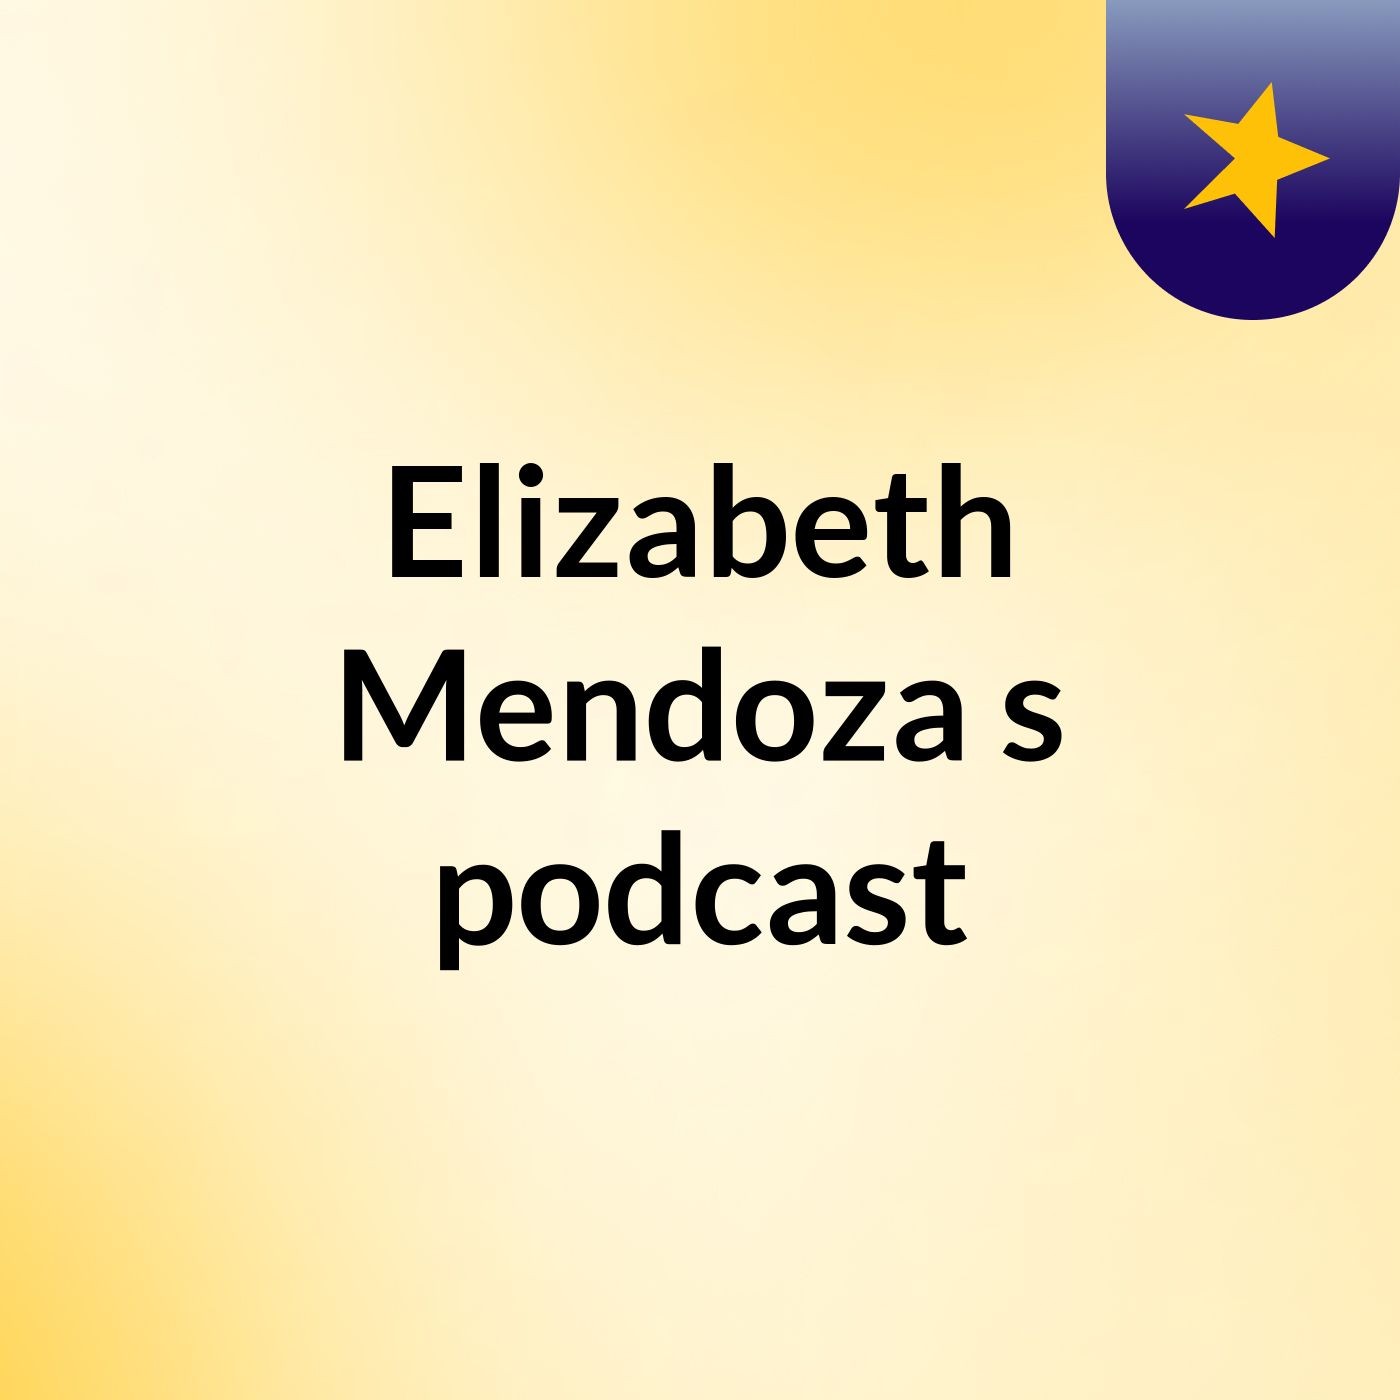 Elizabeth Mendoza's podcast